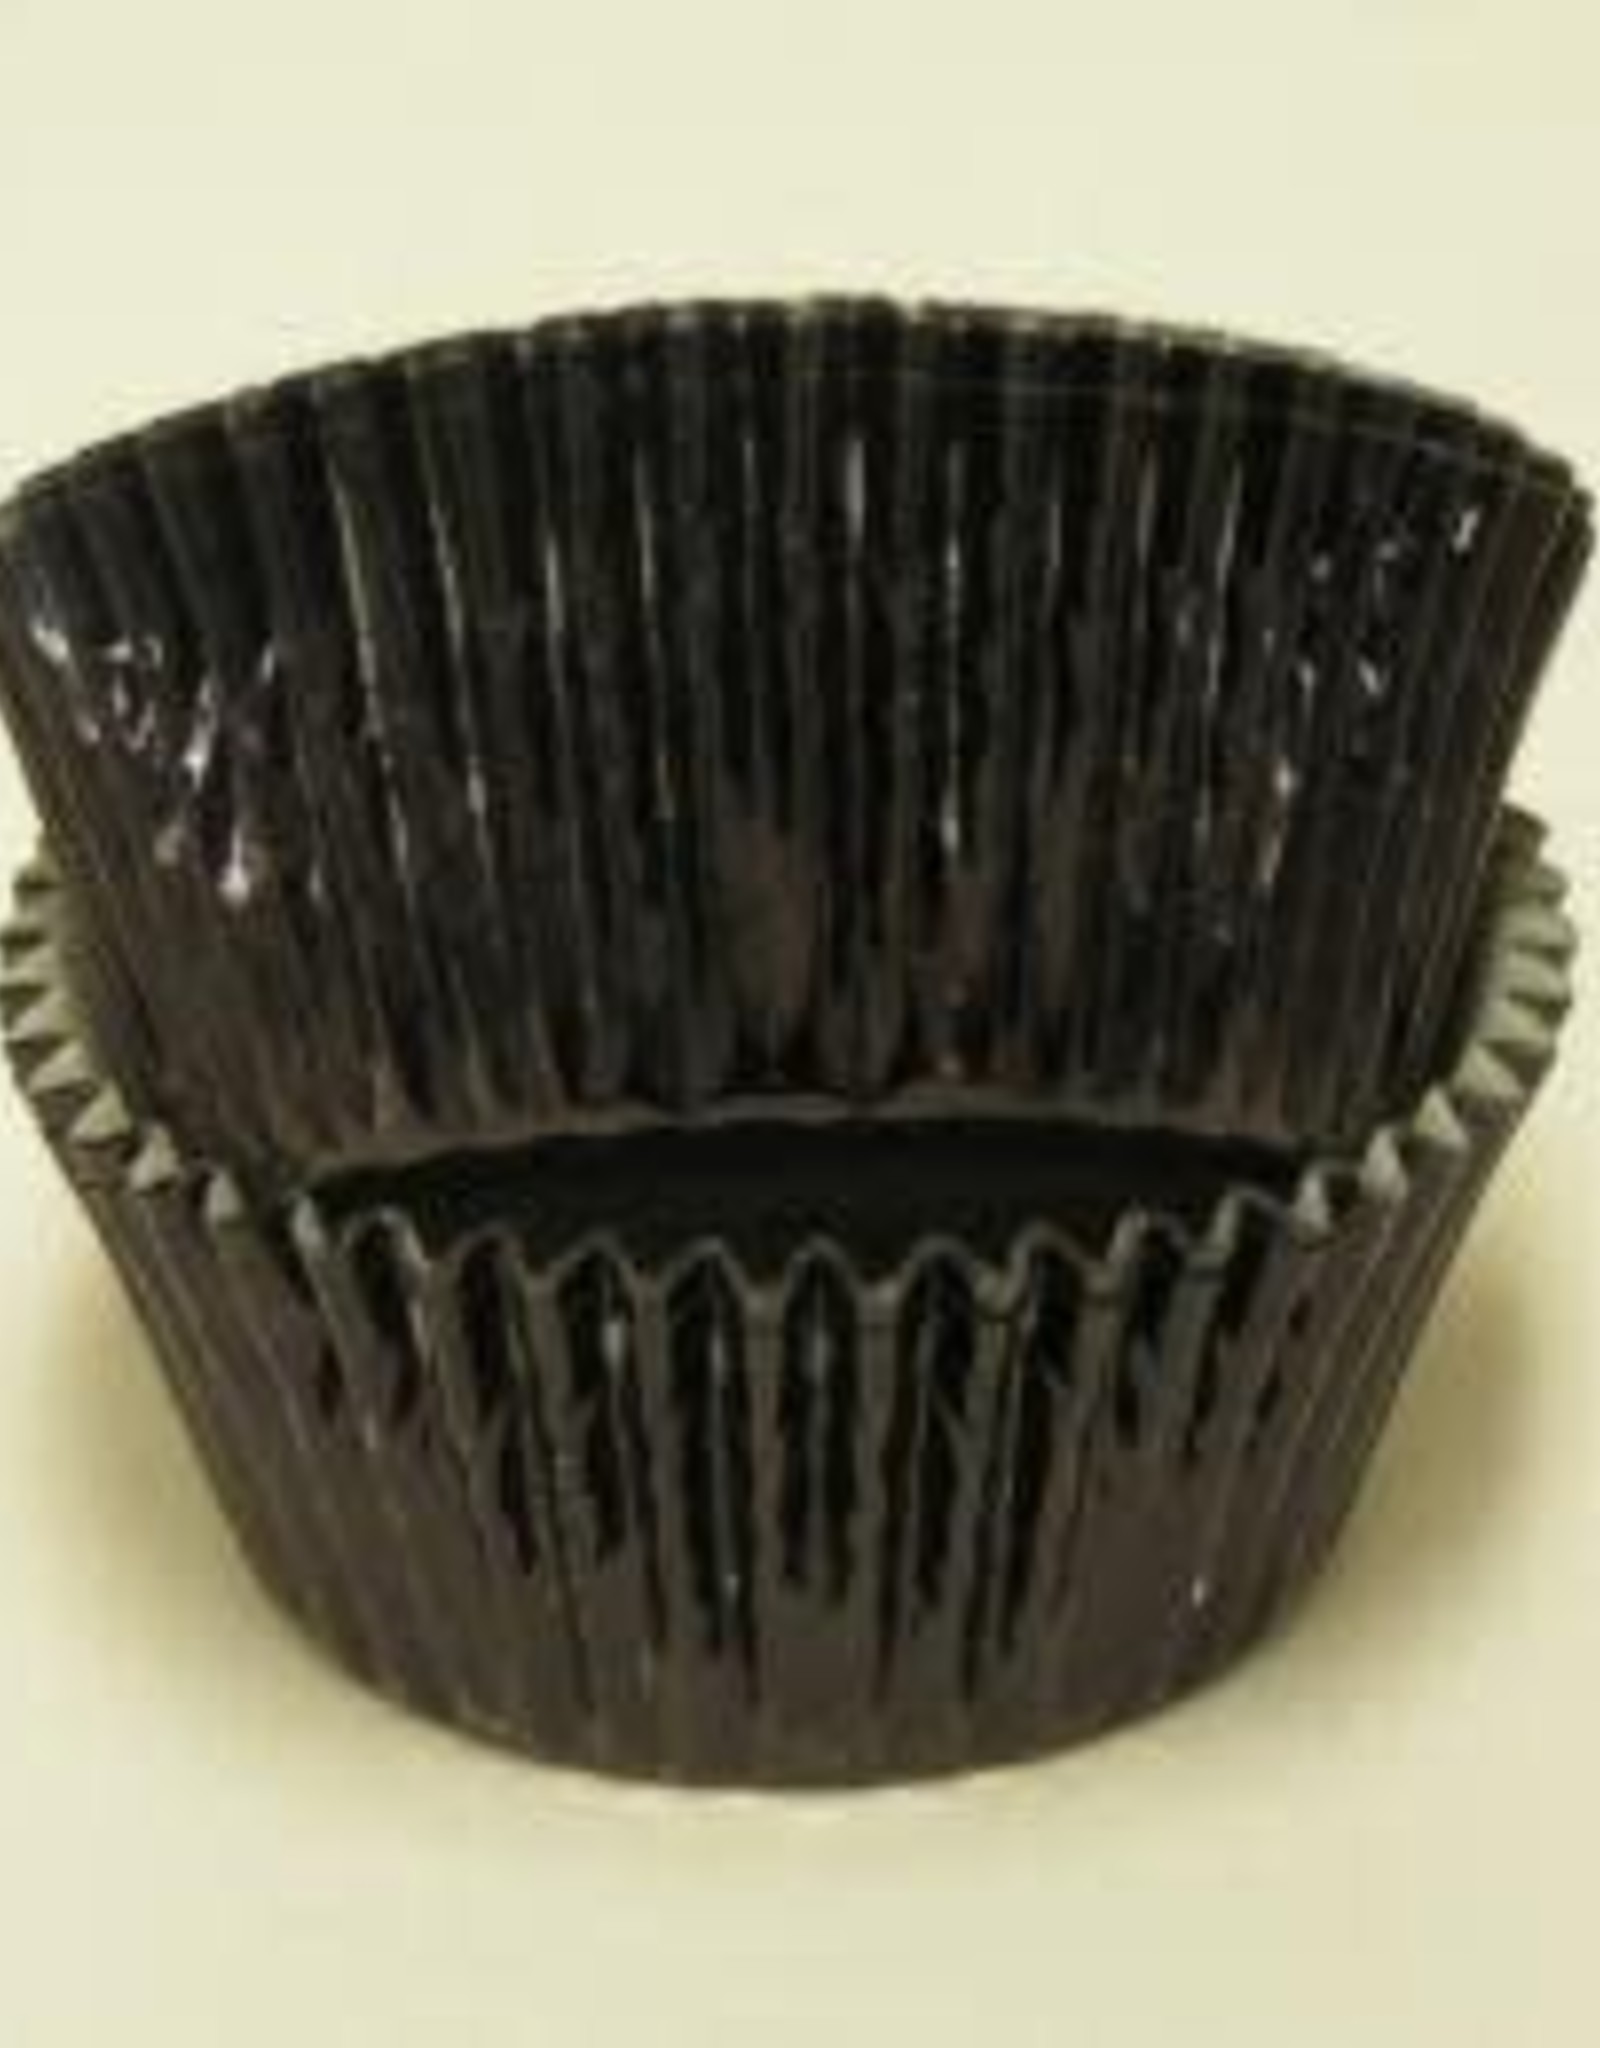 Black Foil Baking Cups (approx 30ct) MAX TEMP 325F